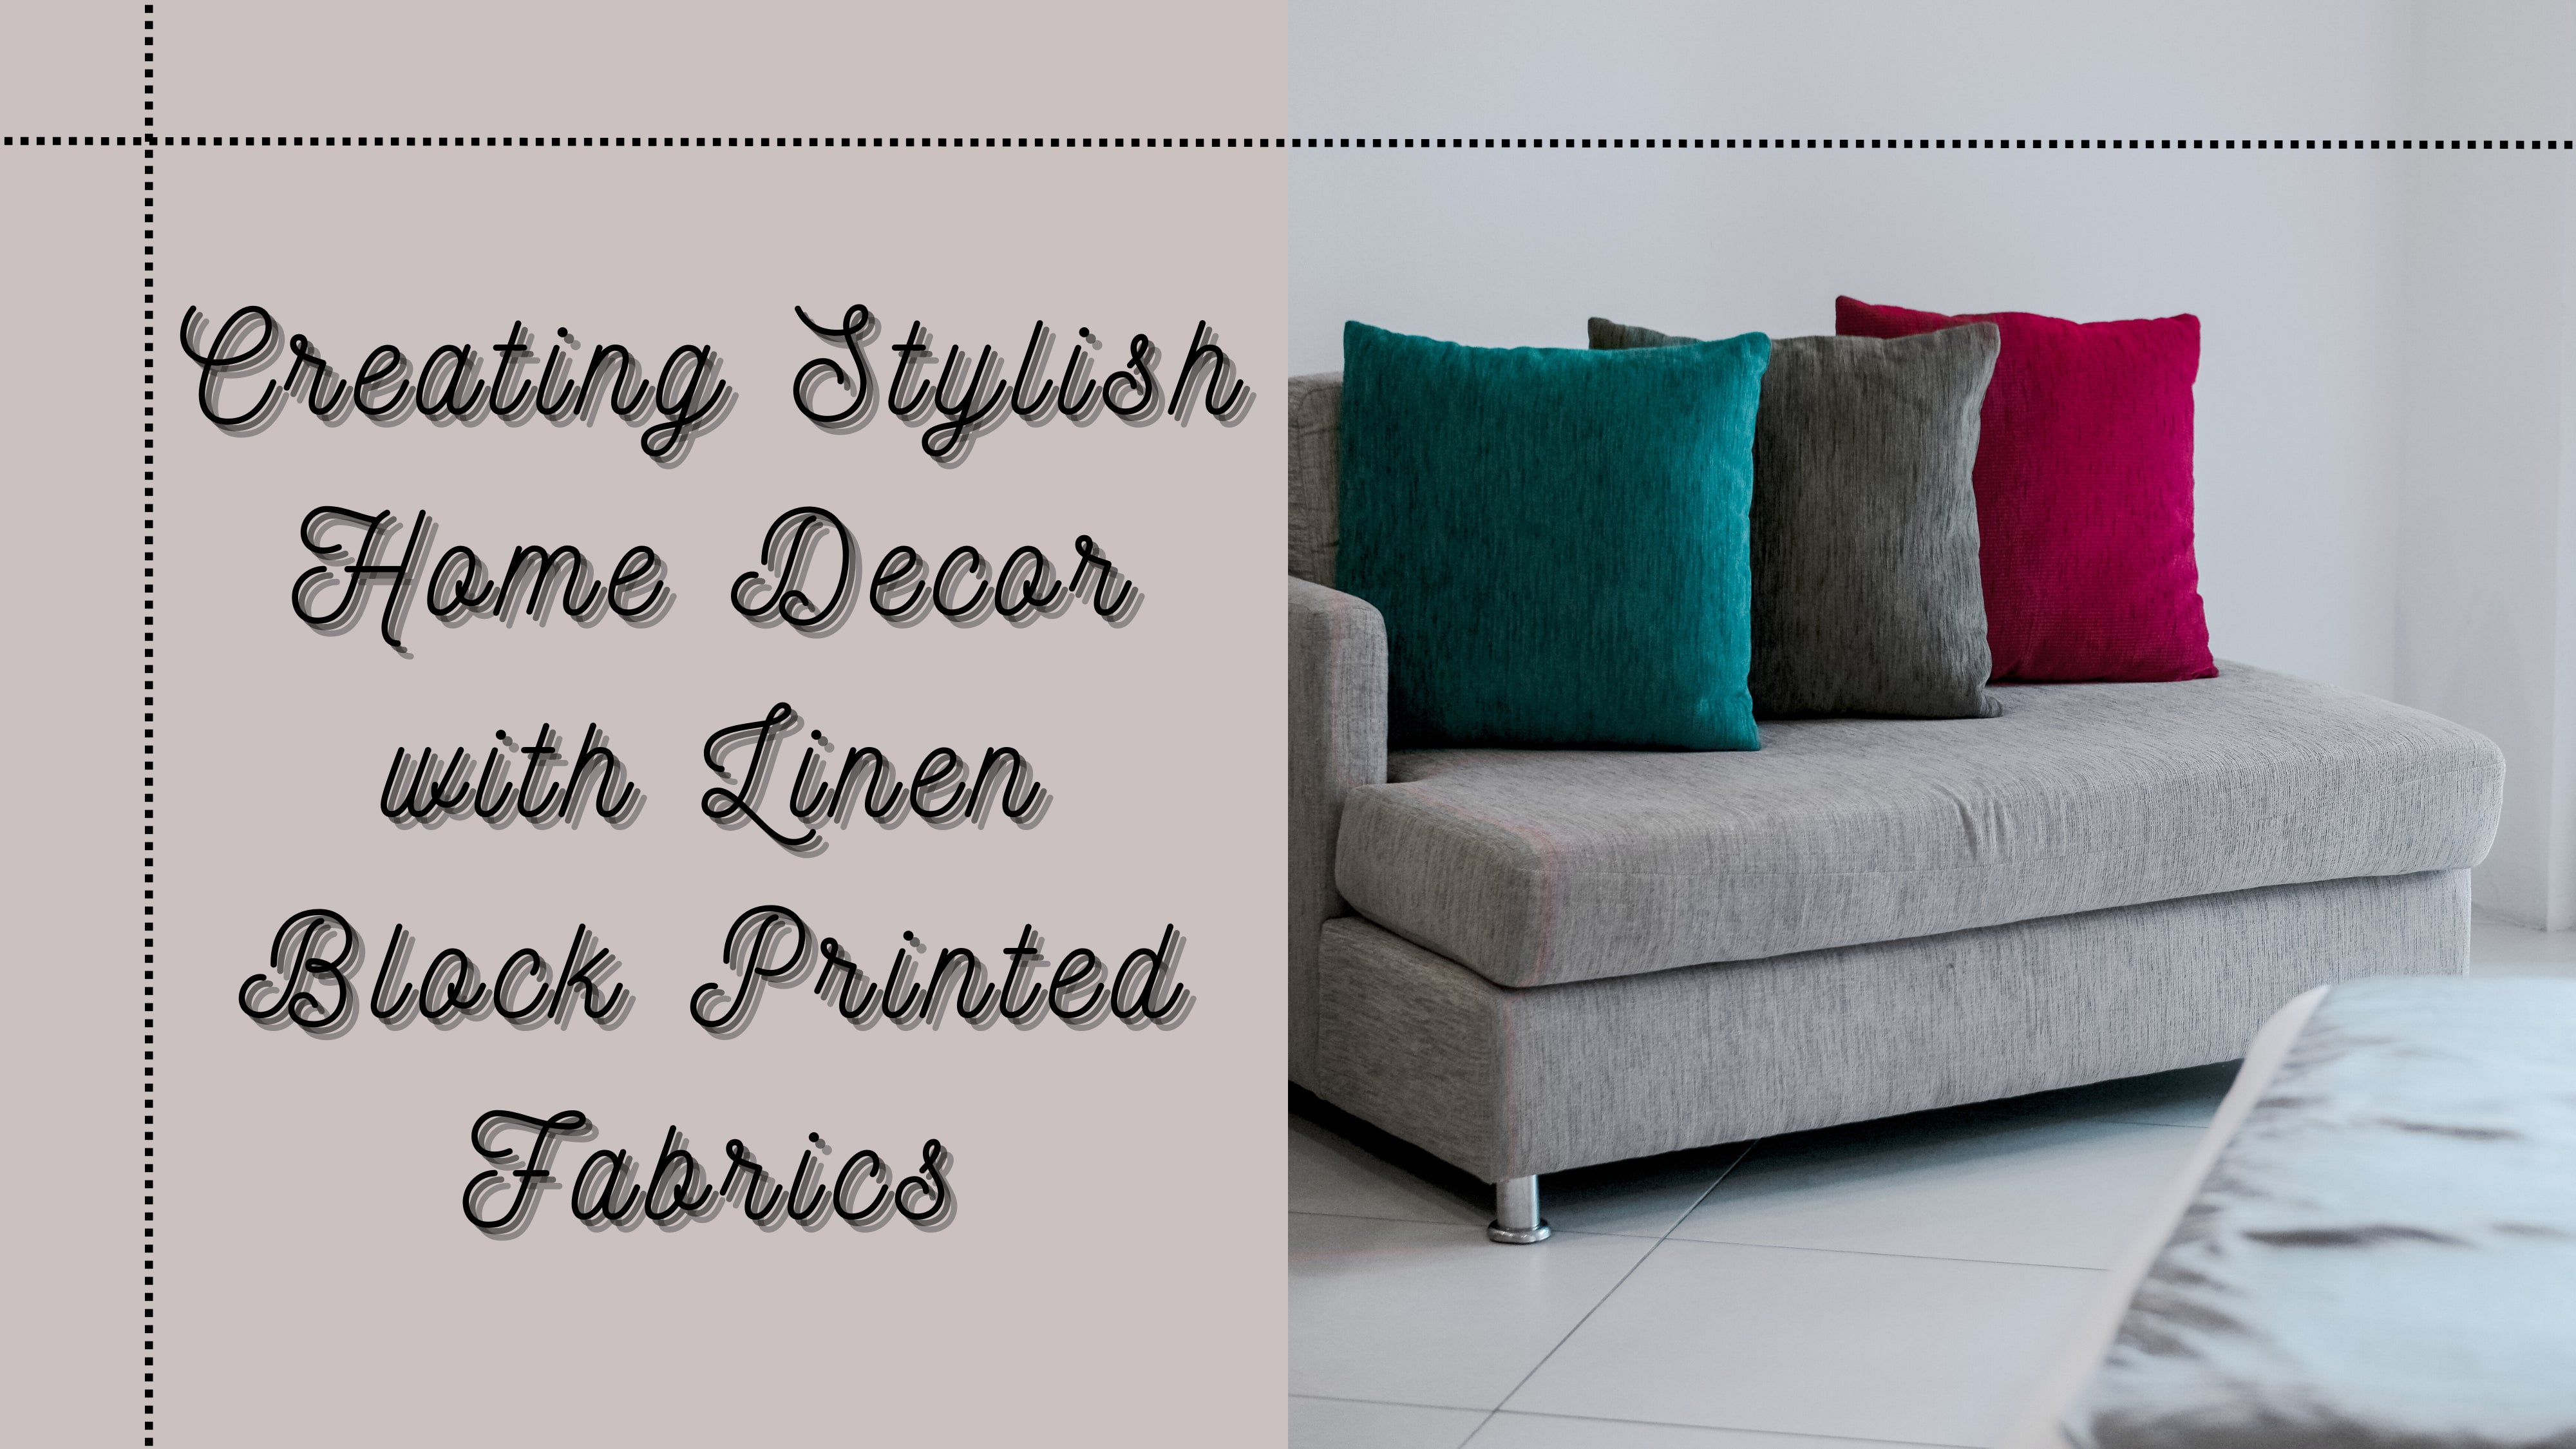 Creating Stylish Home Decor with Linen Block Printed Fabrics